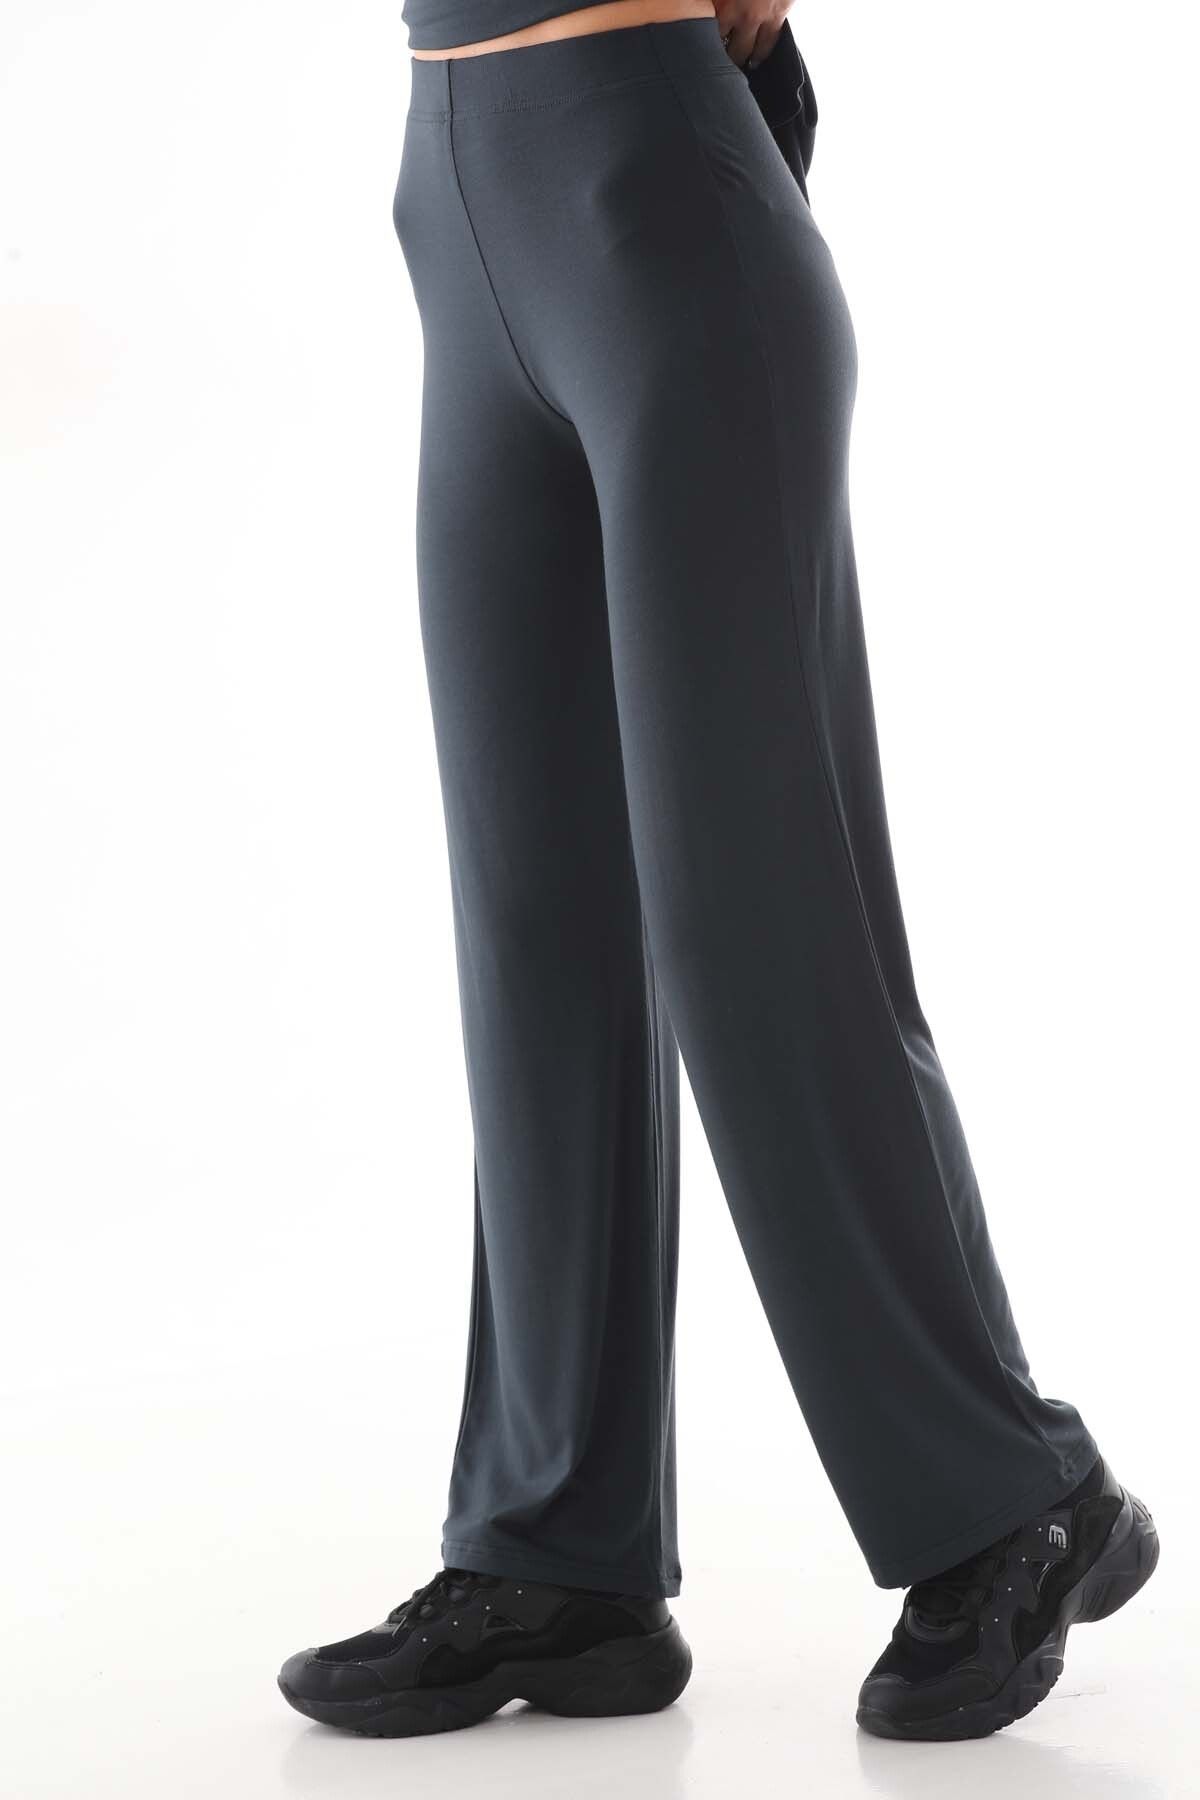 penyebizden Extra Yumuşak Uzun Viskon Pantolon Home&outdoor-füme